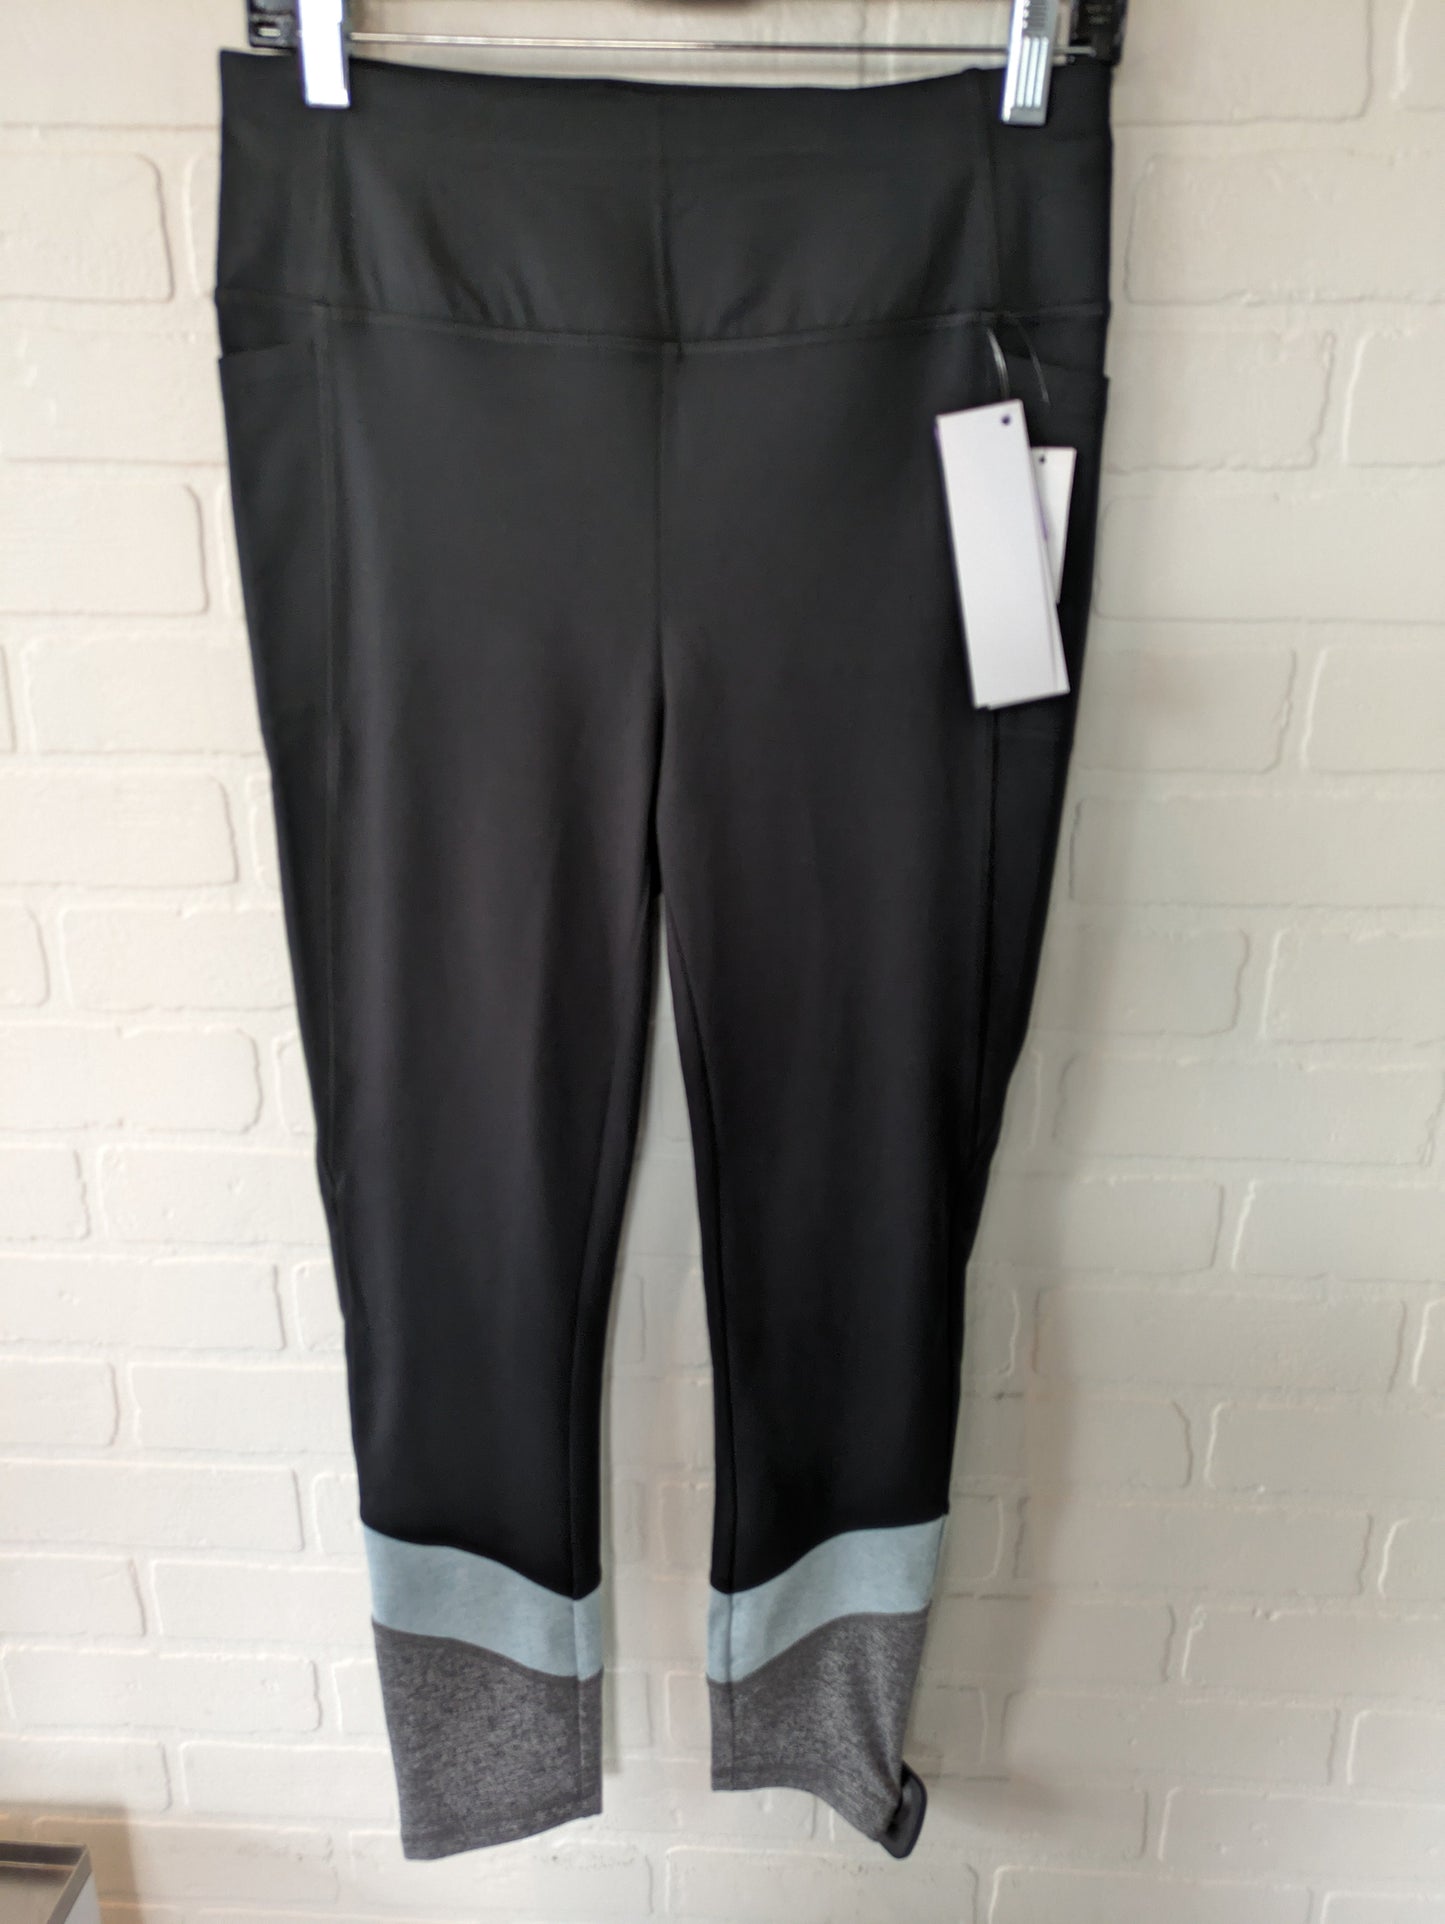 Black & Grey Athletic Leggings Talbots, Size 8petite